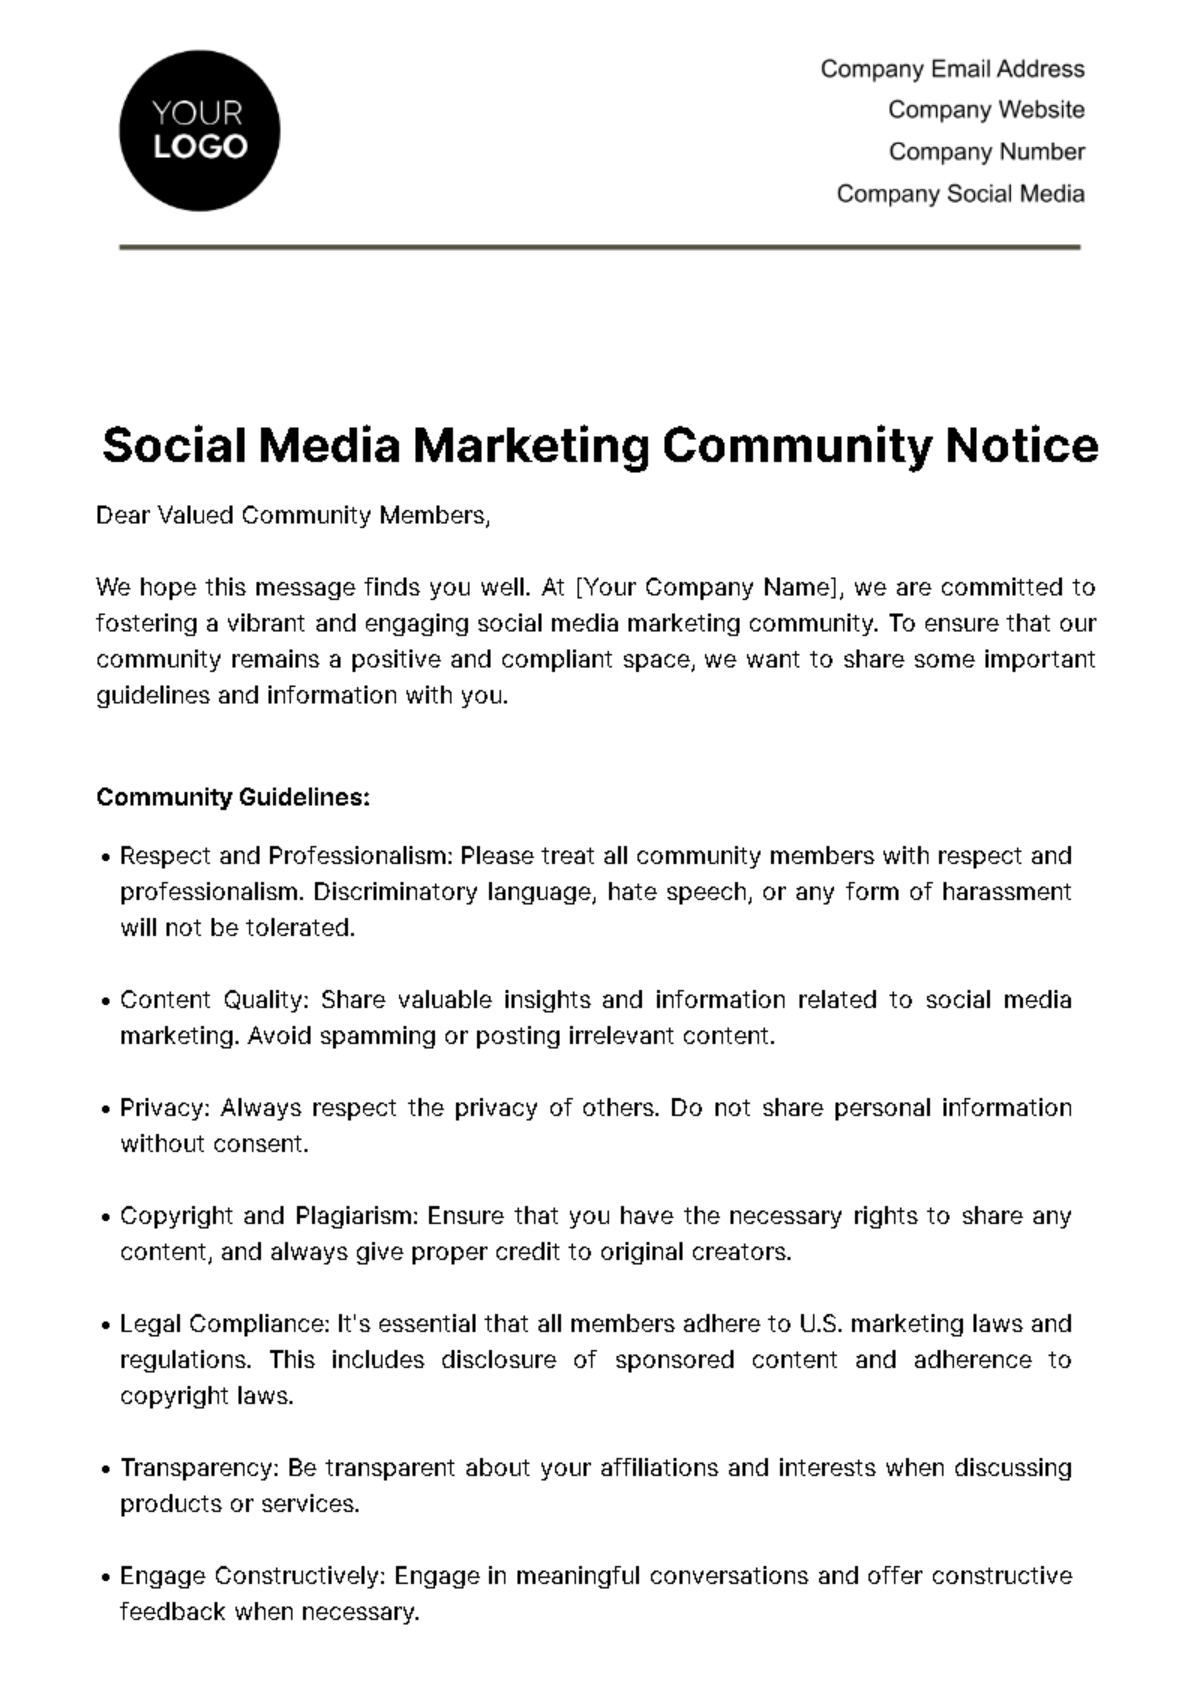 Free Social Media Marketing Community Notice Template